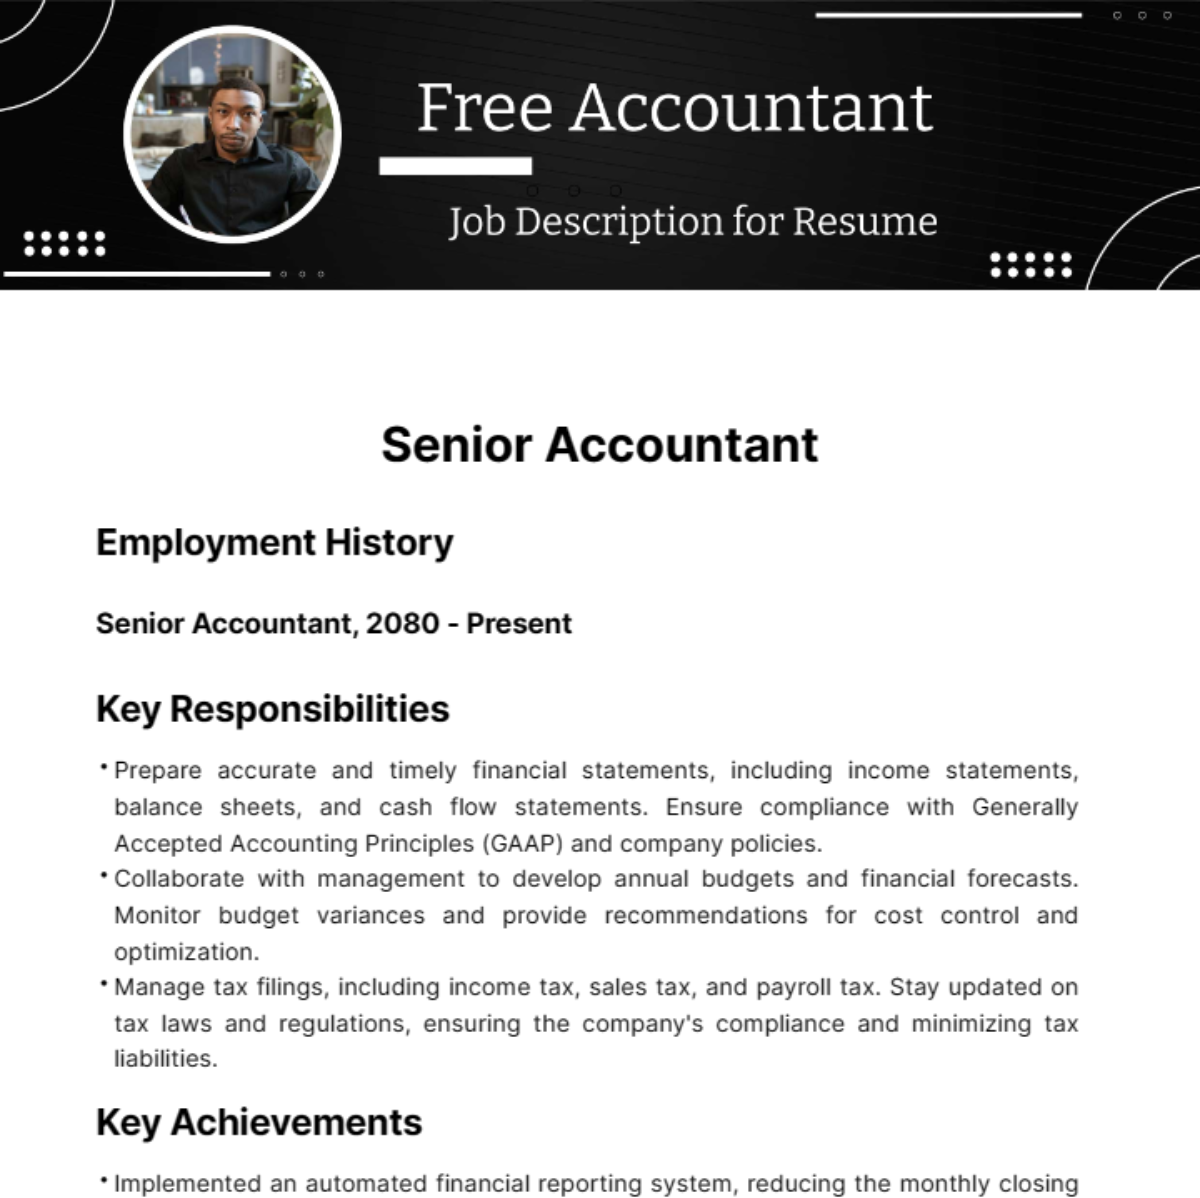 Accountant Job Description for Resume Template